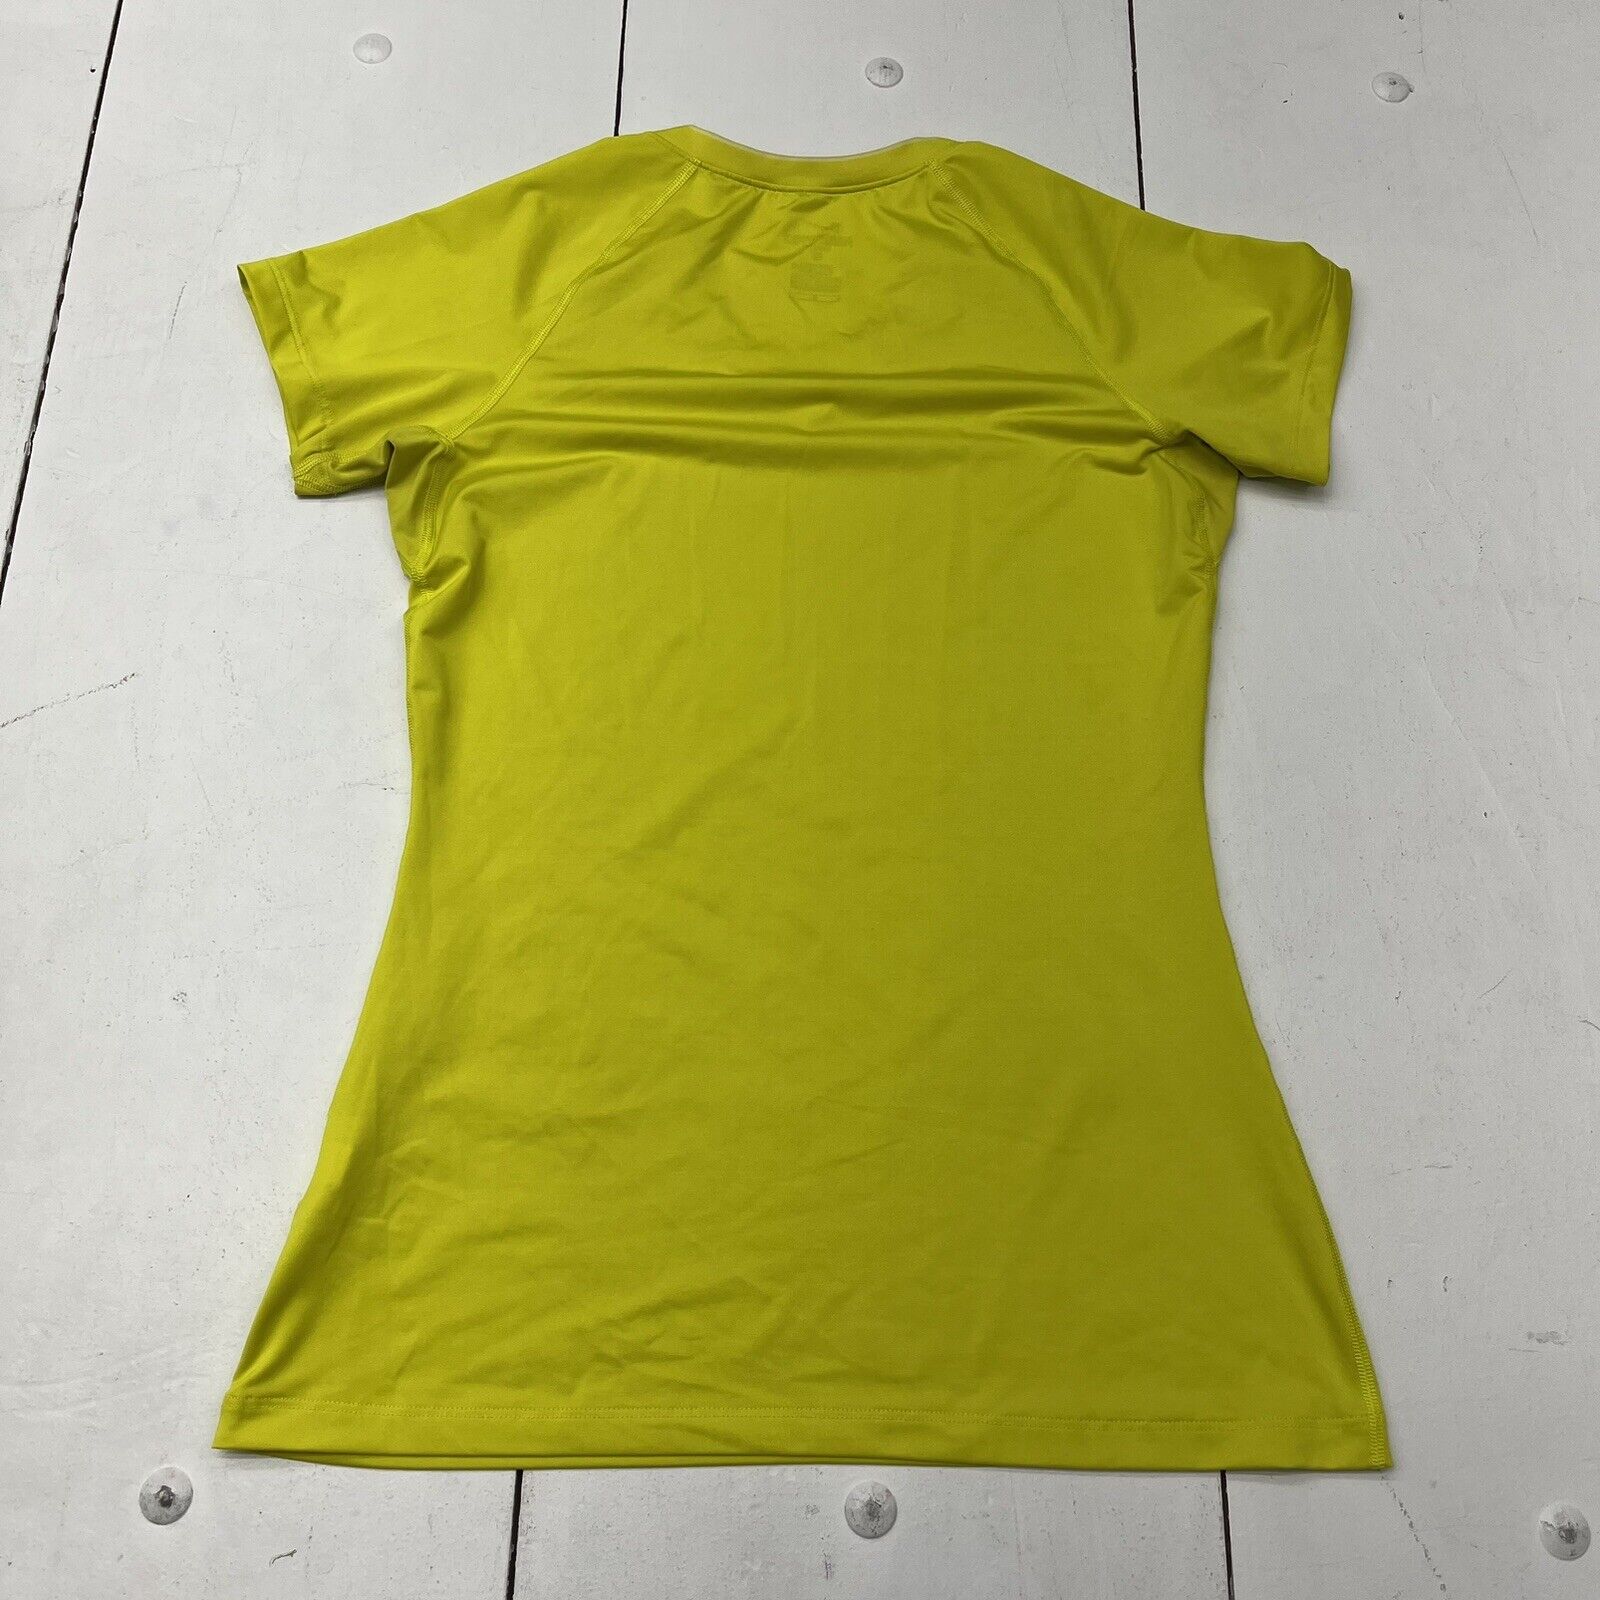 Nike Pro Dri-Fit Yellow Fitted T-Shirt Women's Size Medium - beyond exchange